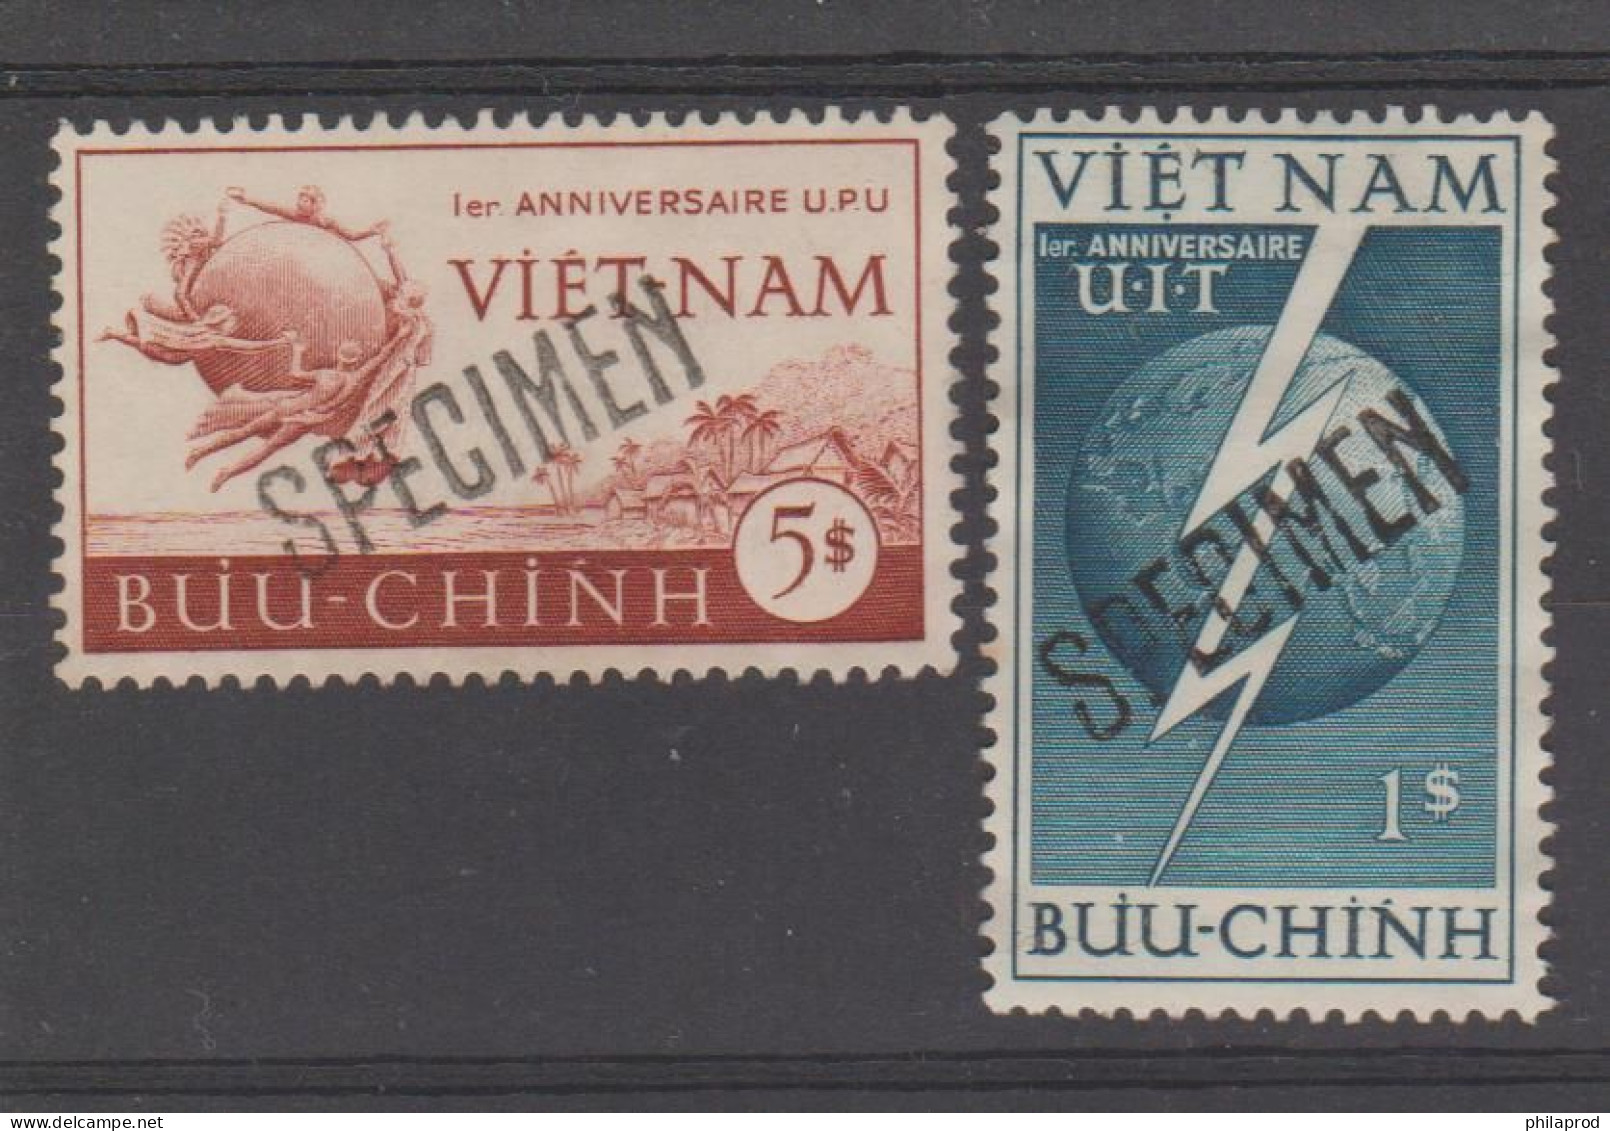 S.VIETNAM  OVERPRINE  SPECIMEN  UPU &  UIT   -   2 Complete Sets  No Gum - Vietnam